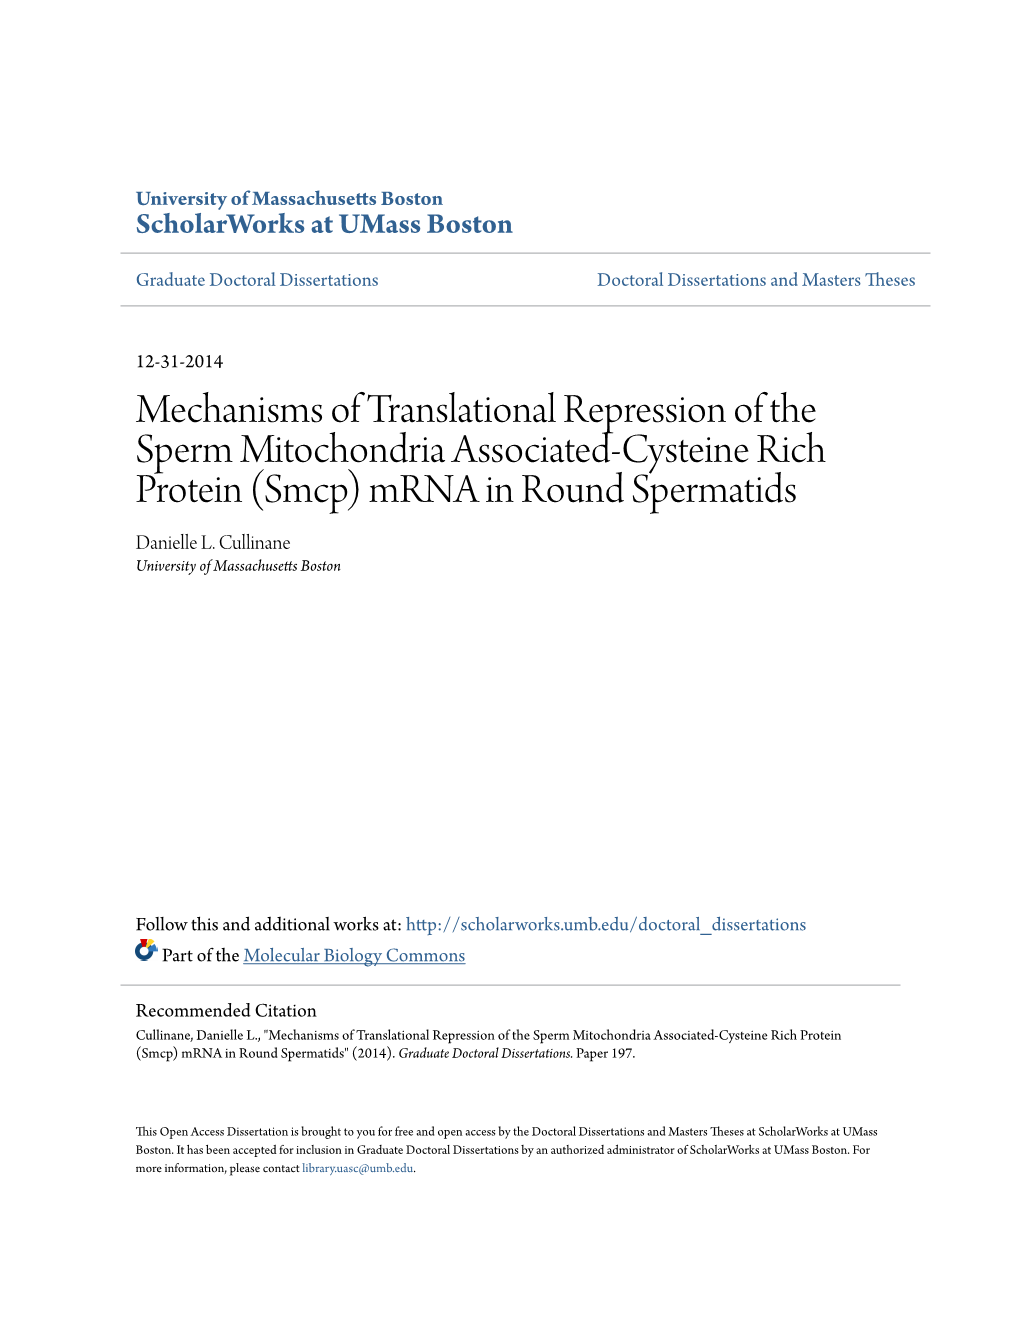 Mechanisms of Translational Repression of the Sperm Mitochondria Associated-Cysteine Rich Protein (Smcp) Mrna in Round Spermatids Danielle L